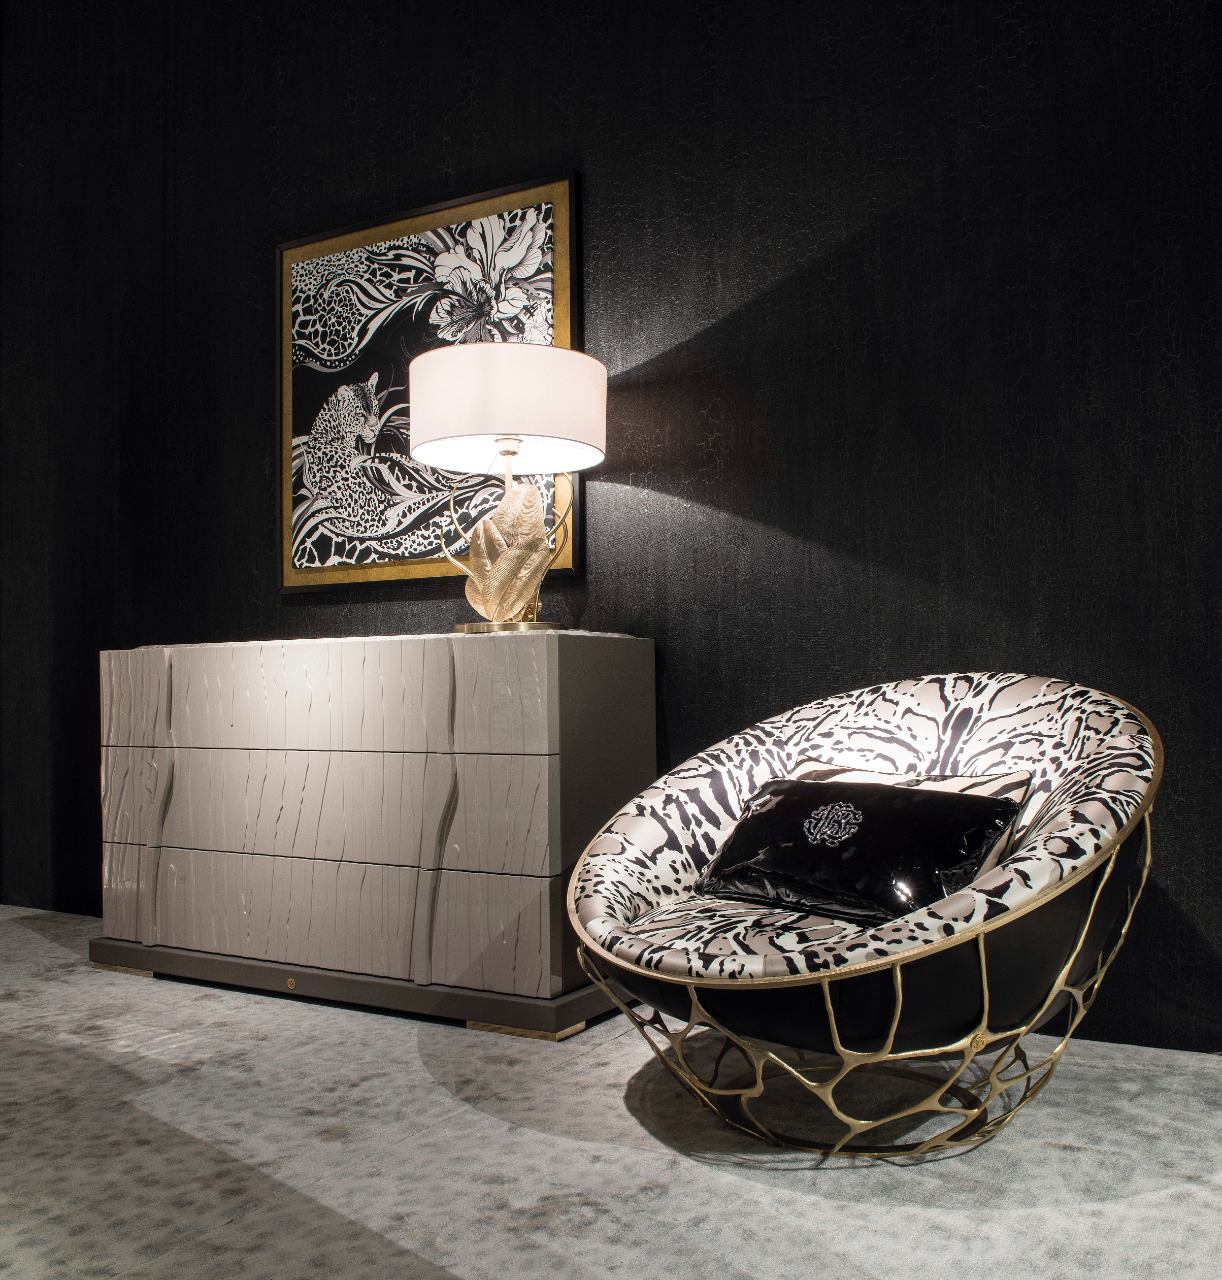 Roberto Cavalli Home Interiors Launches Signature Armchairs